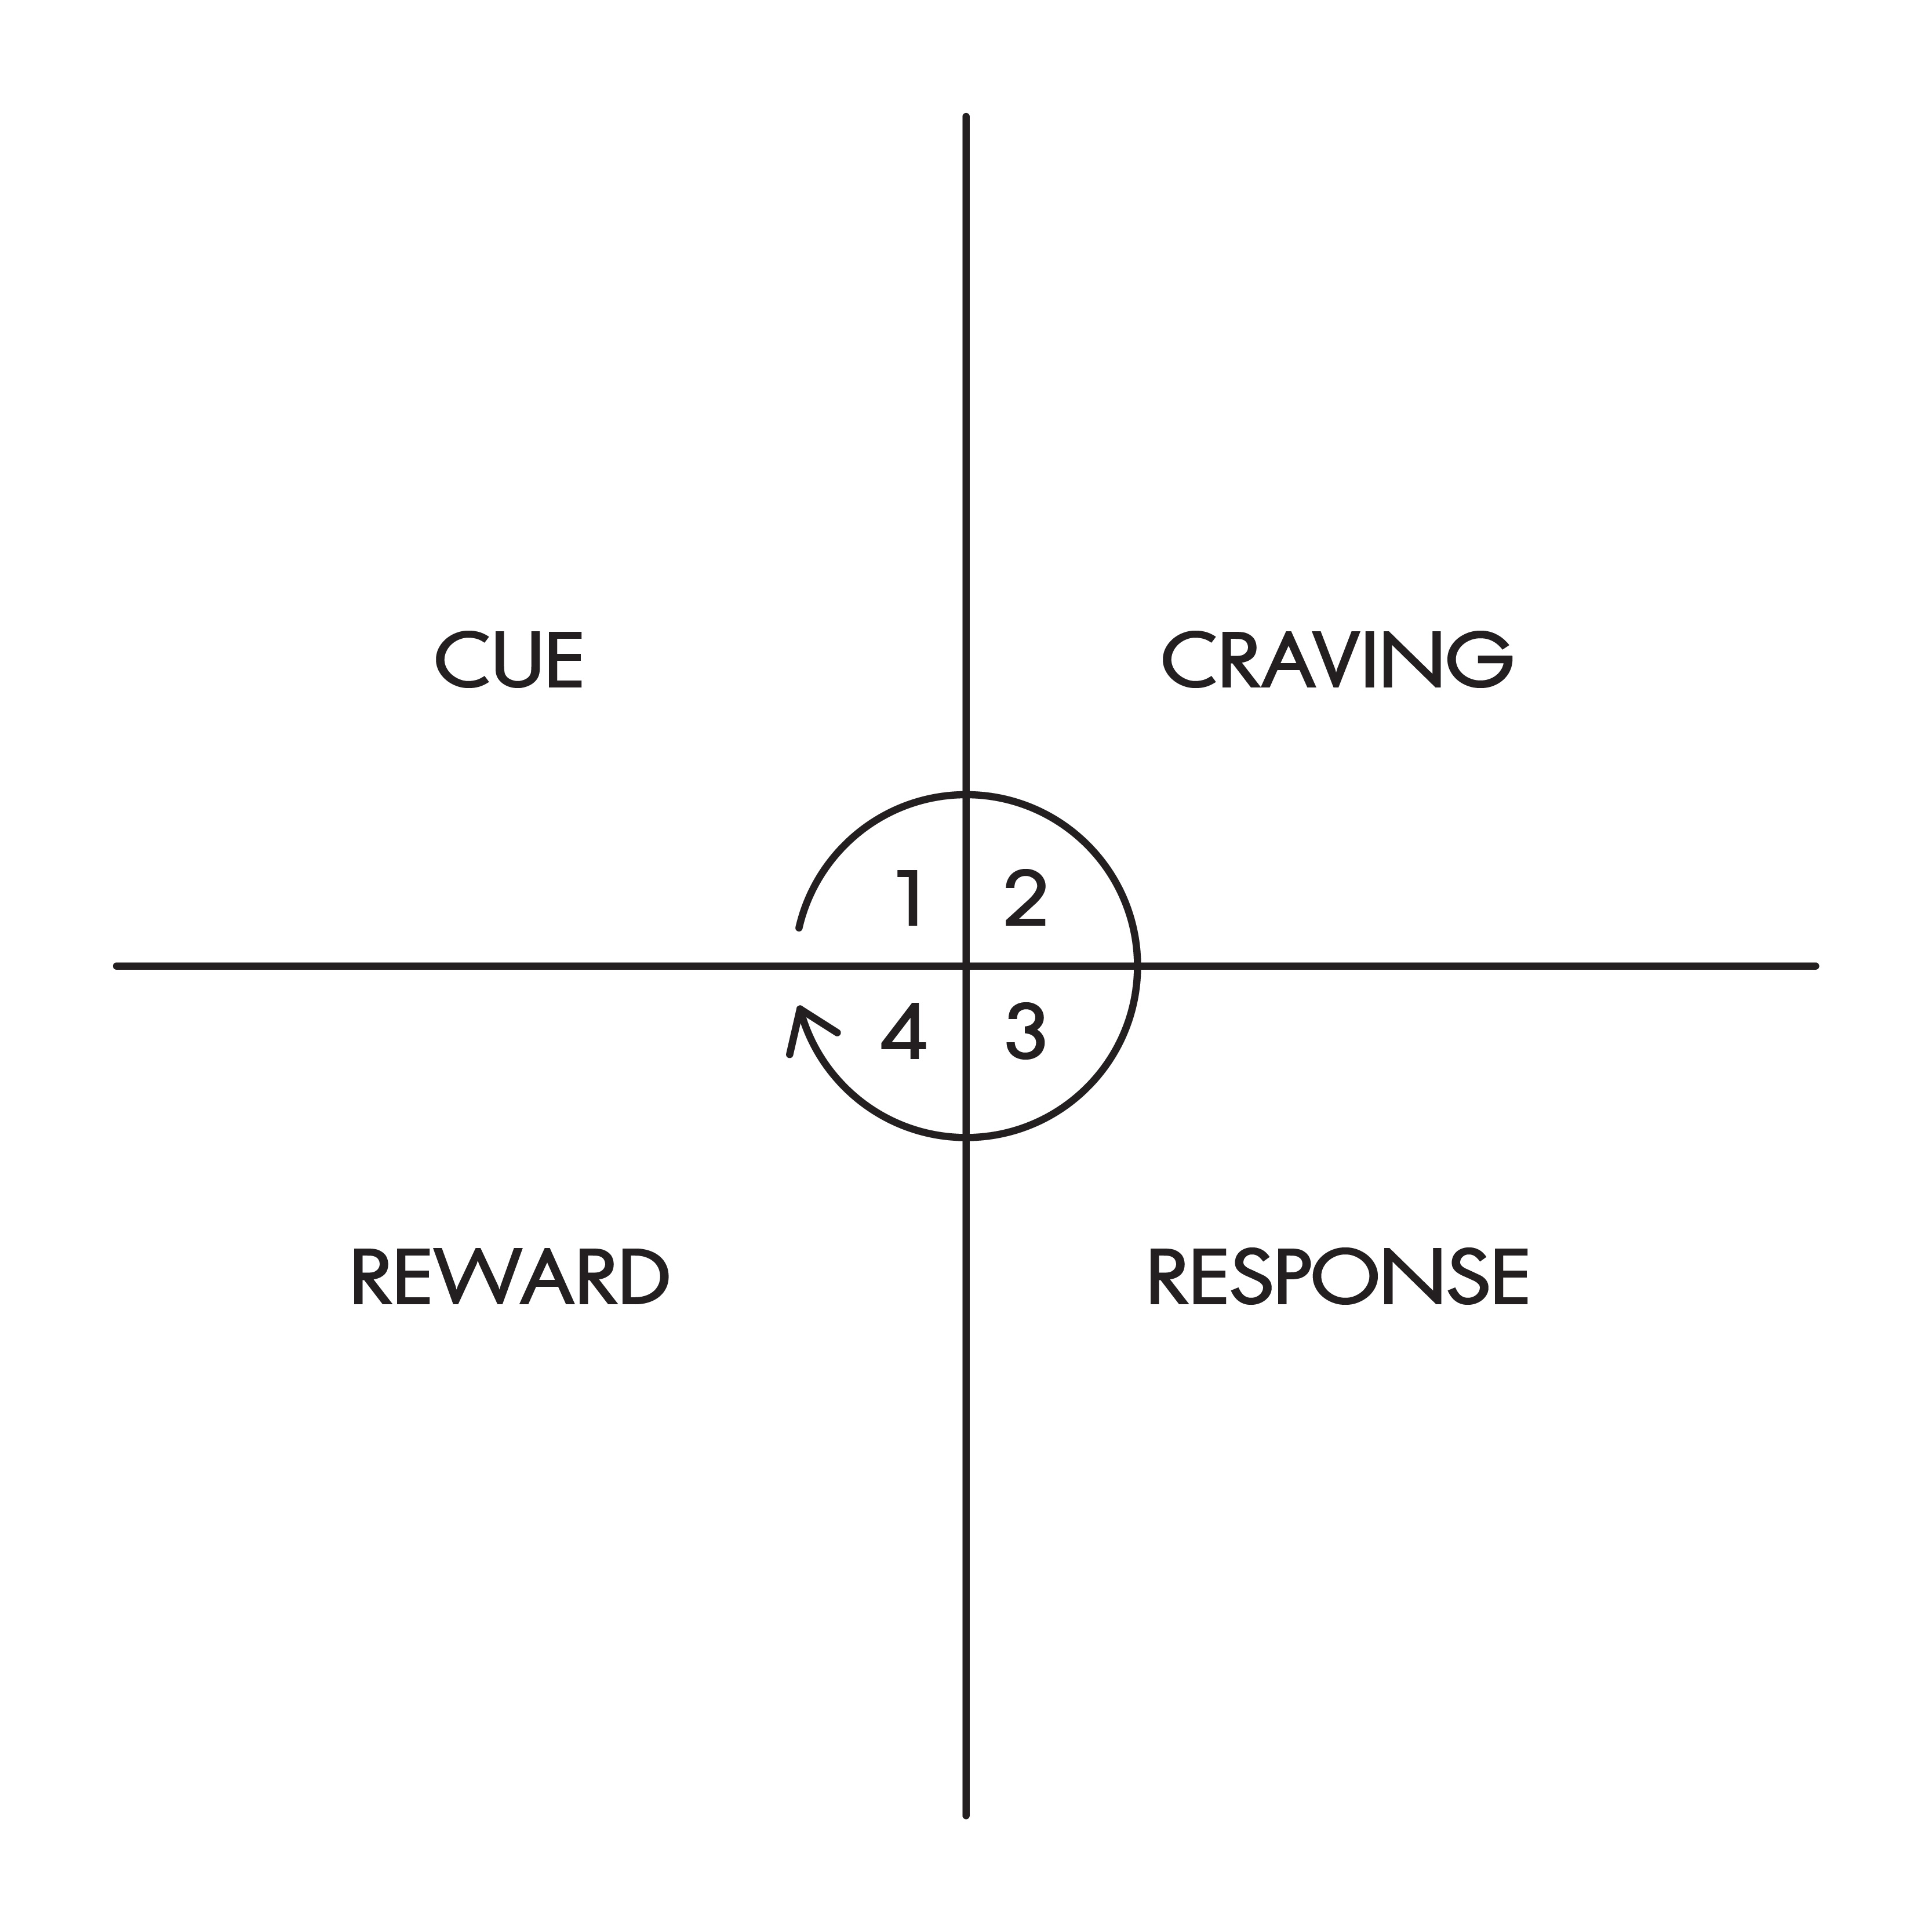 The habit loop by James Clear Cue > Craving > Response > Reward